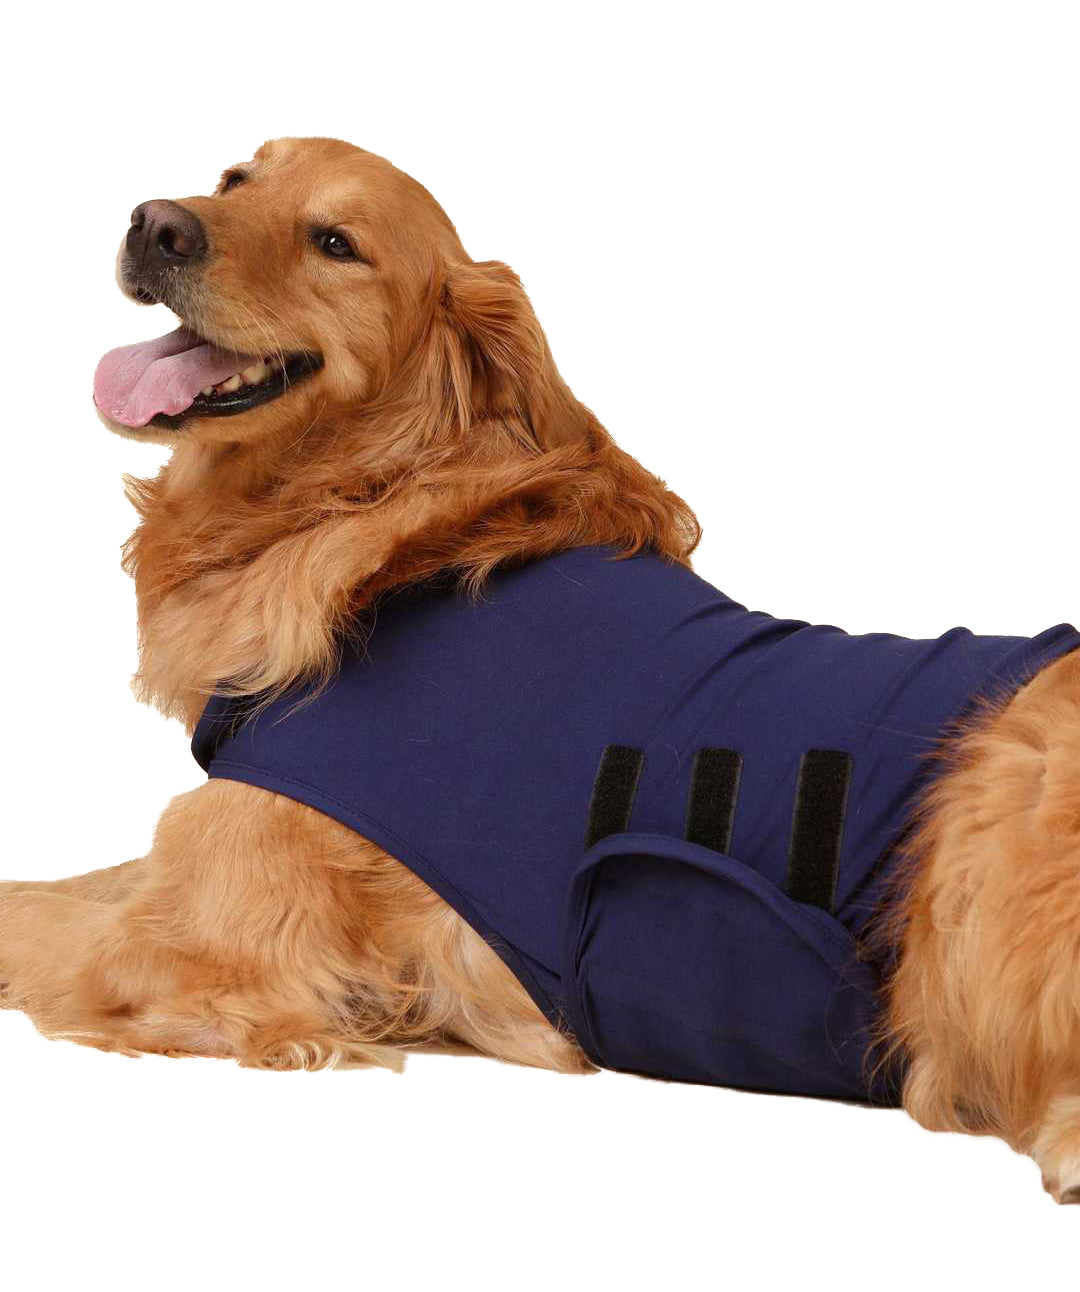 Honest Paws Calm Dog Vest Calming Vest Rover 